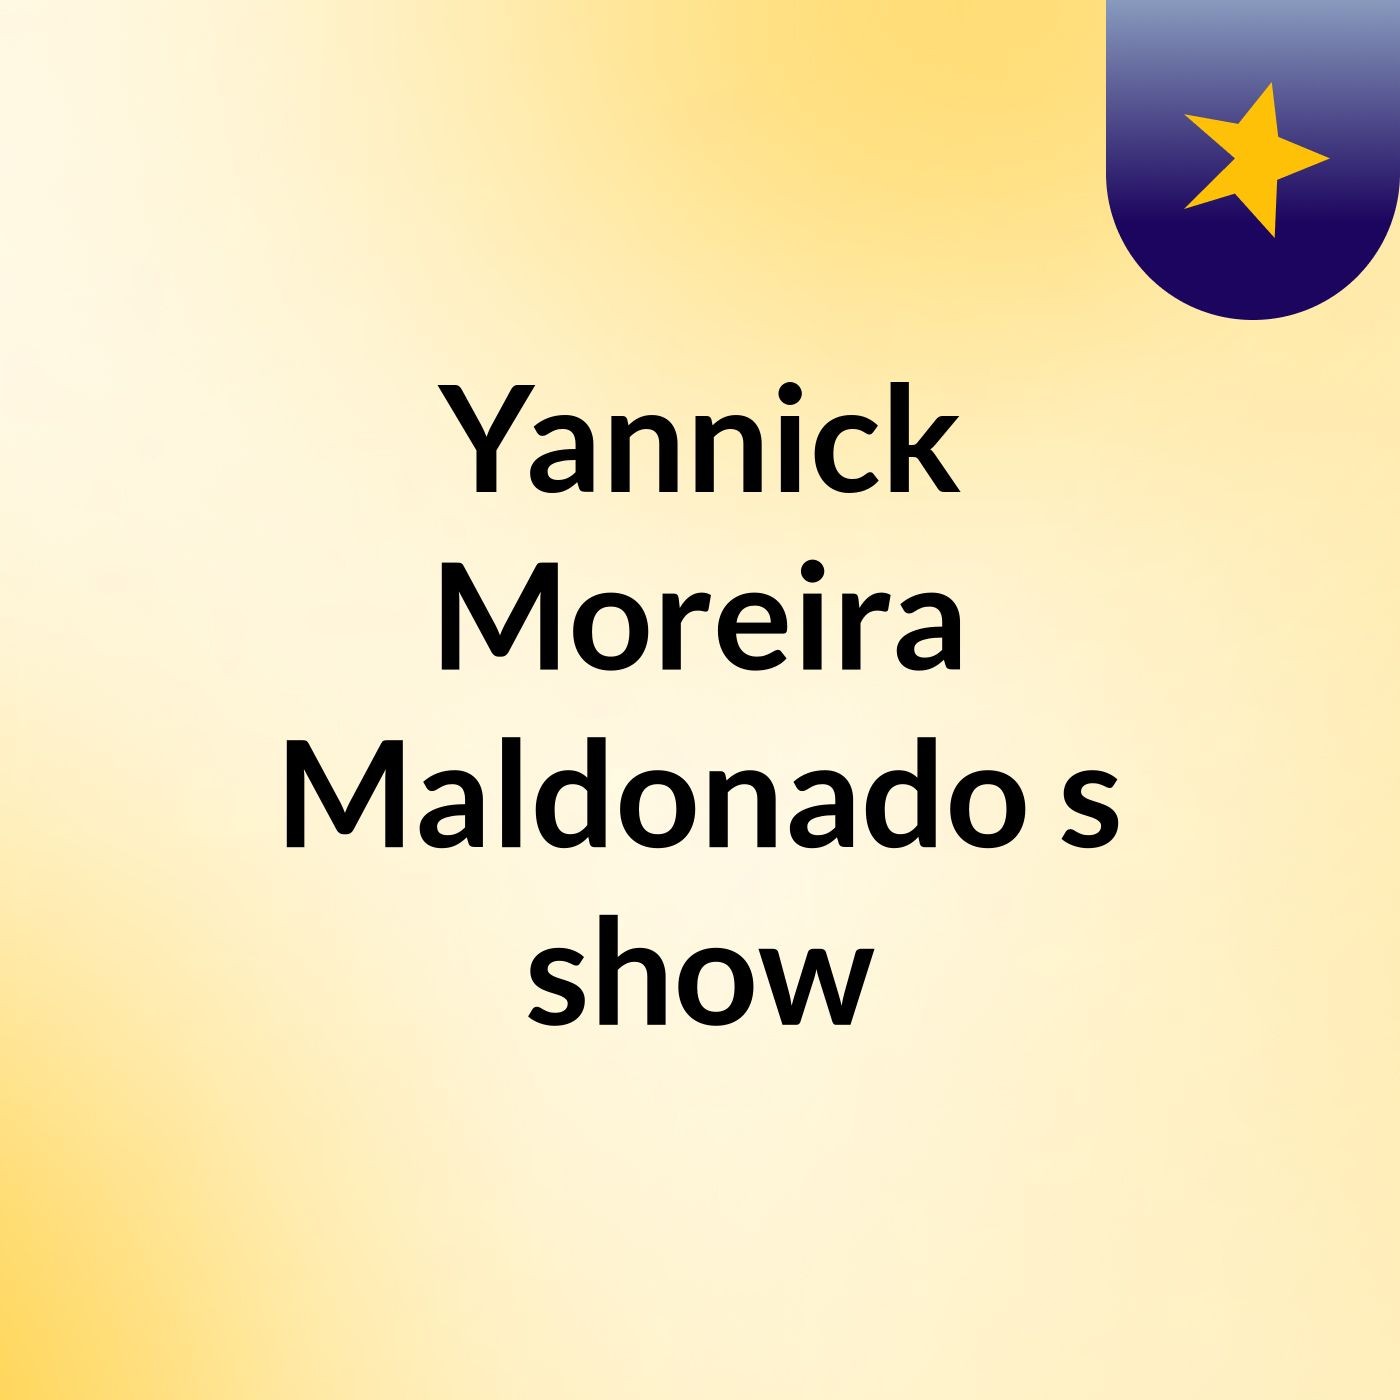 Yannick Moreira Maldonado's show